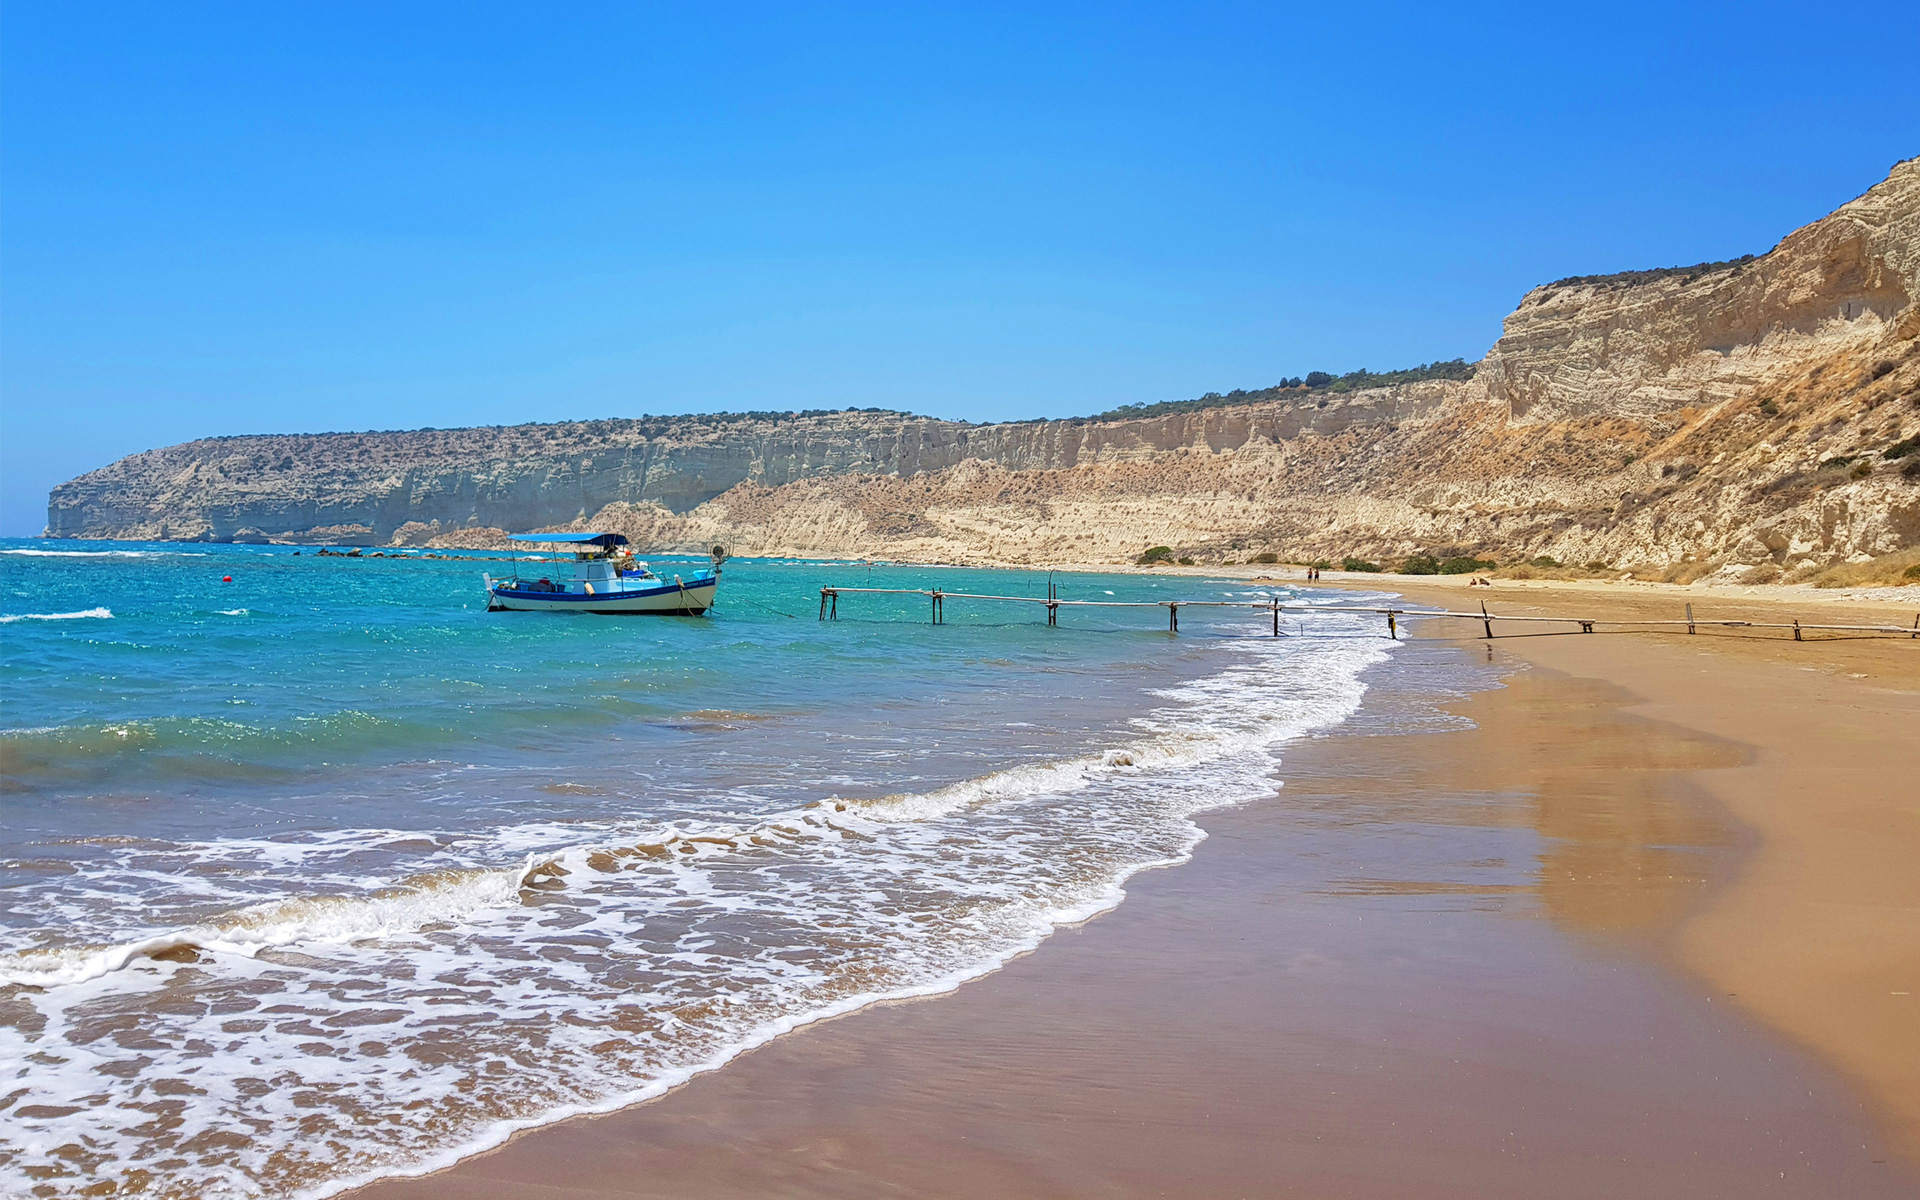 Episkopi Bay (Tripiti – Zapalo Beach) in Cyprus